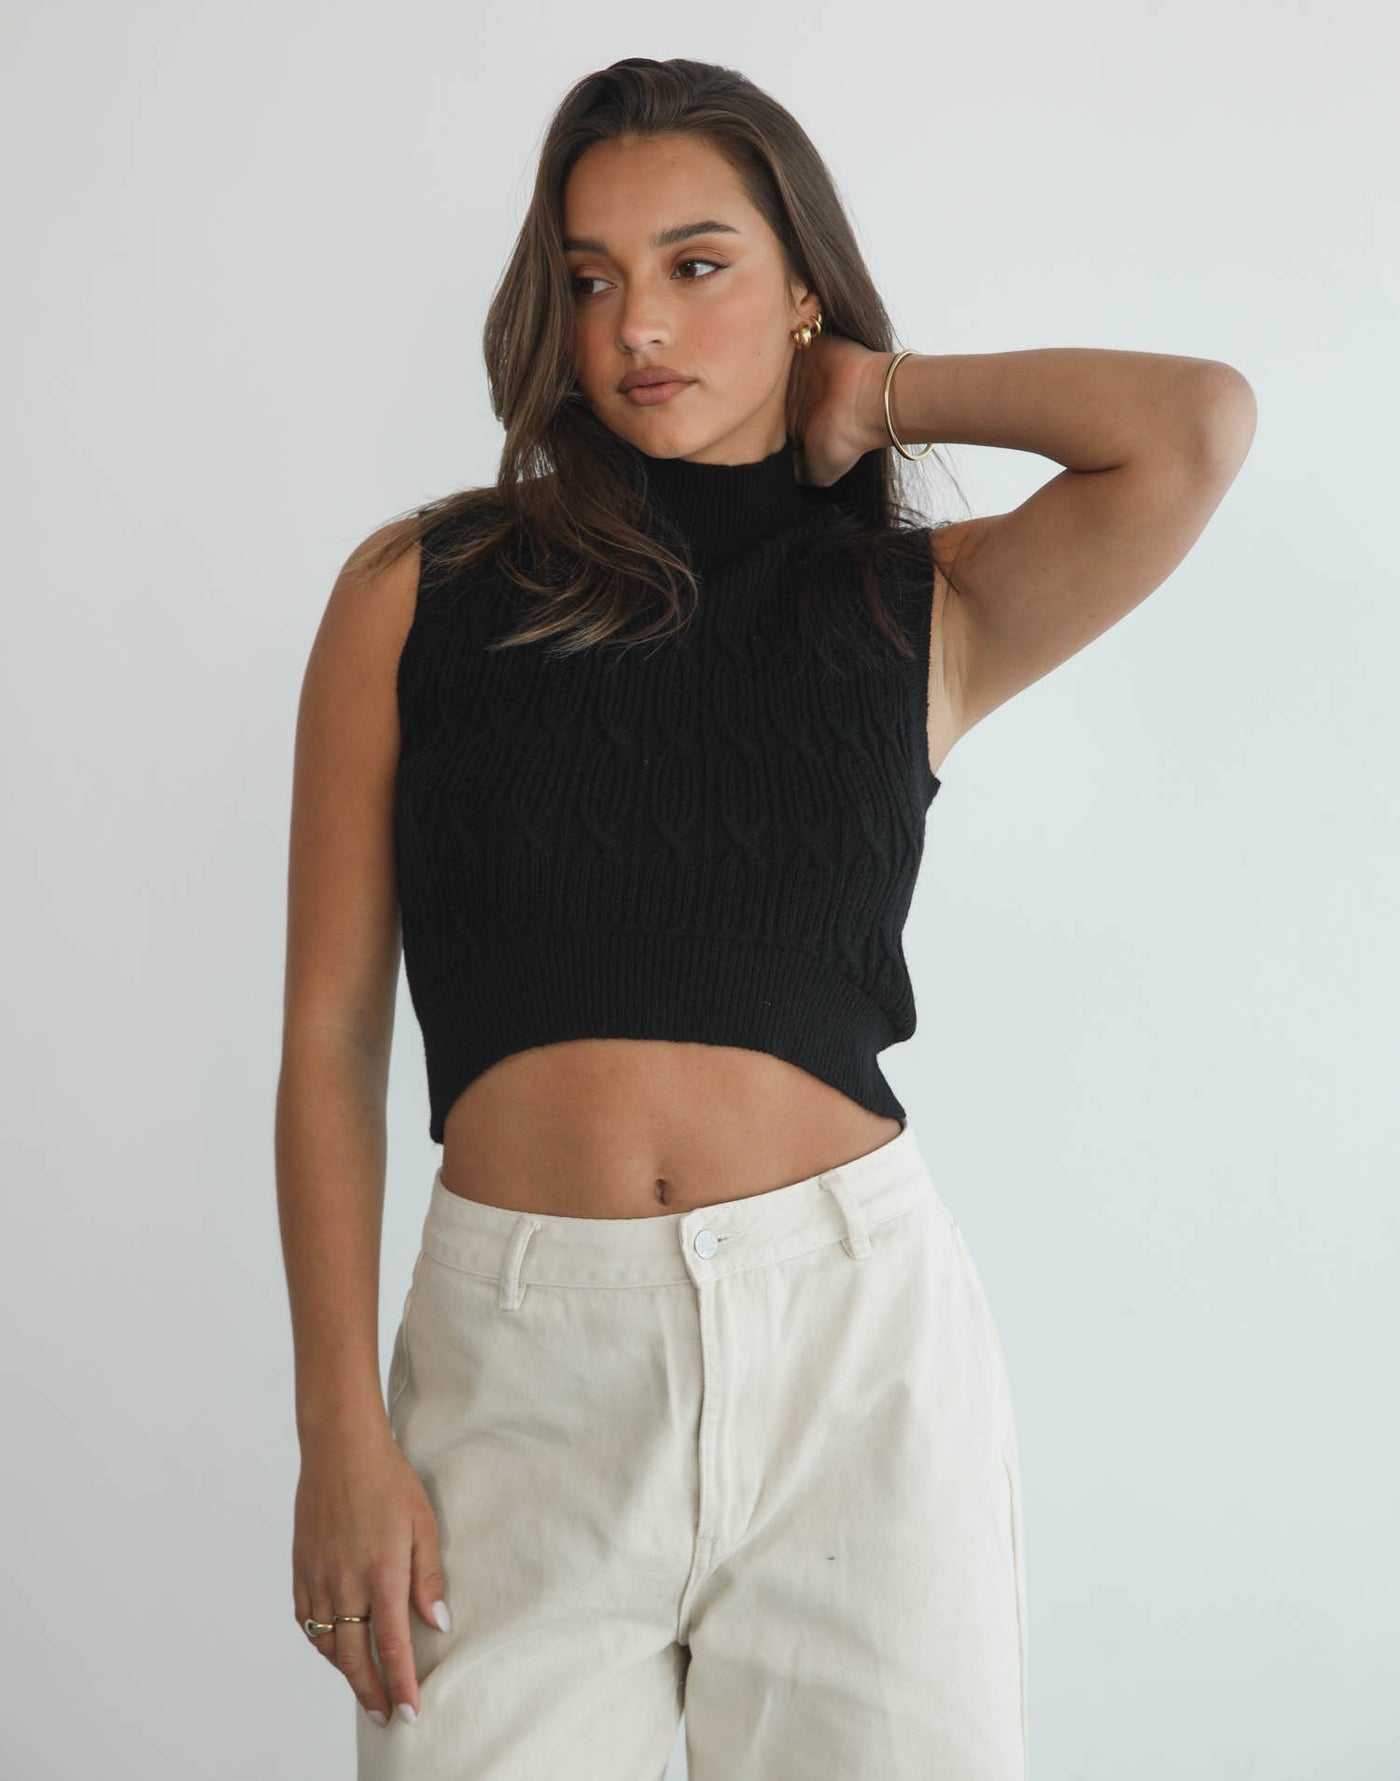 Anya Knit Crop Top (Black) - High Neck Knit Crop Top - Women's Top - Charcoal Clothing